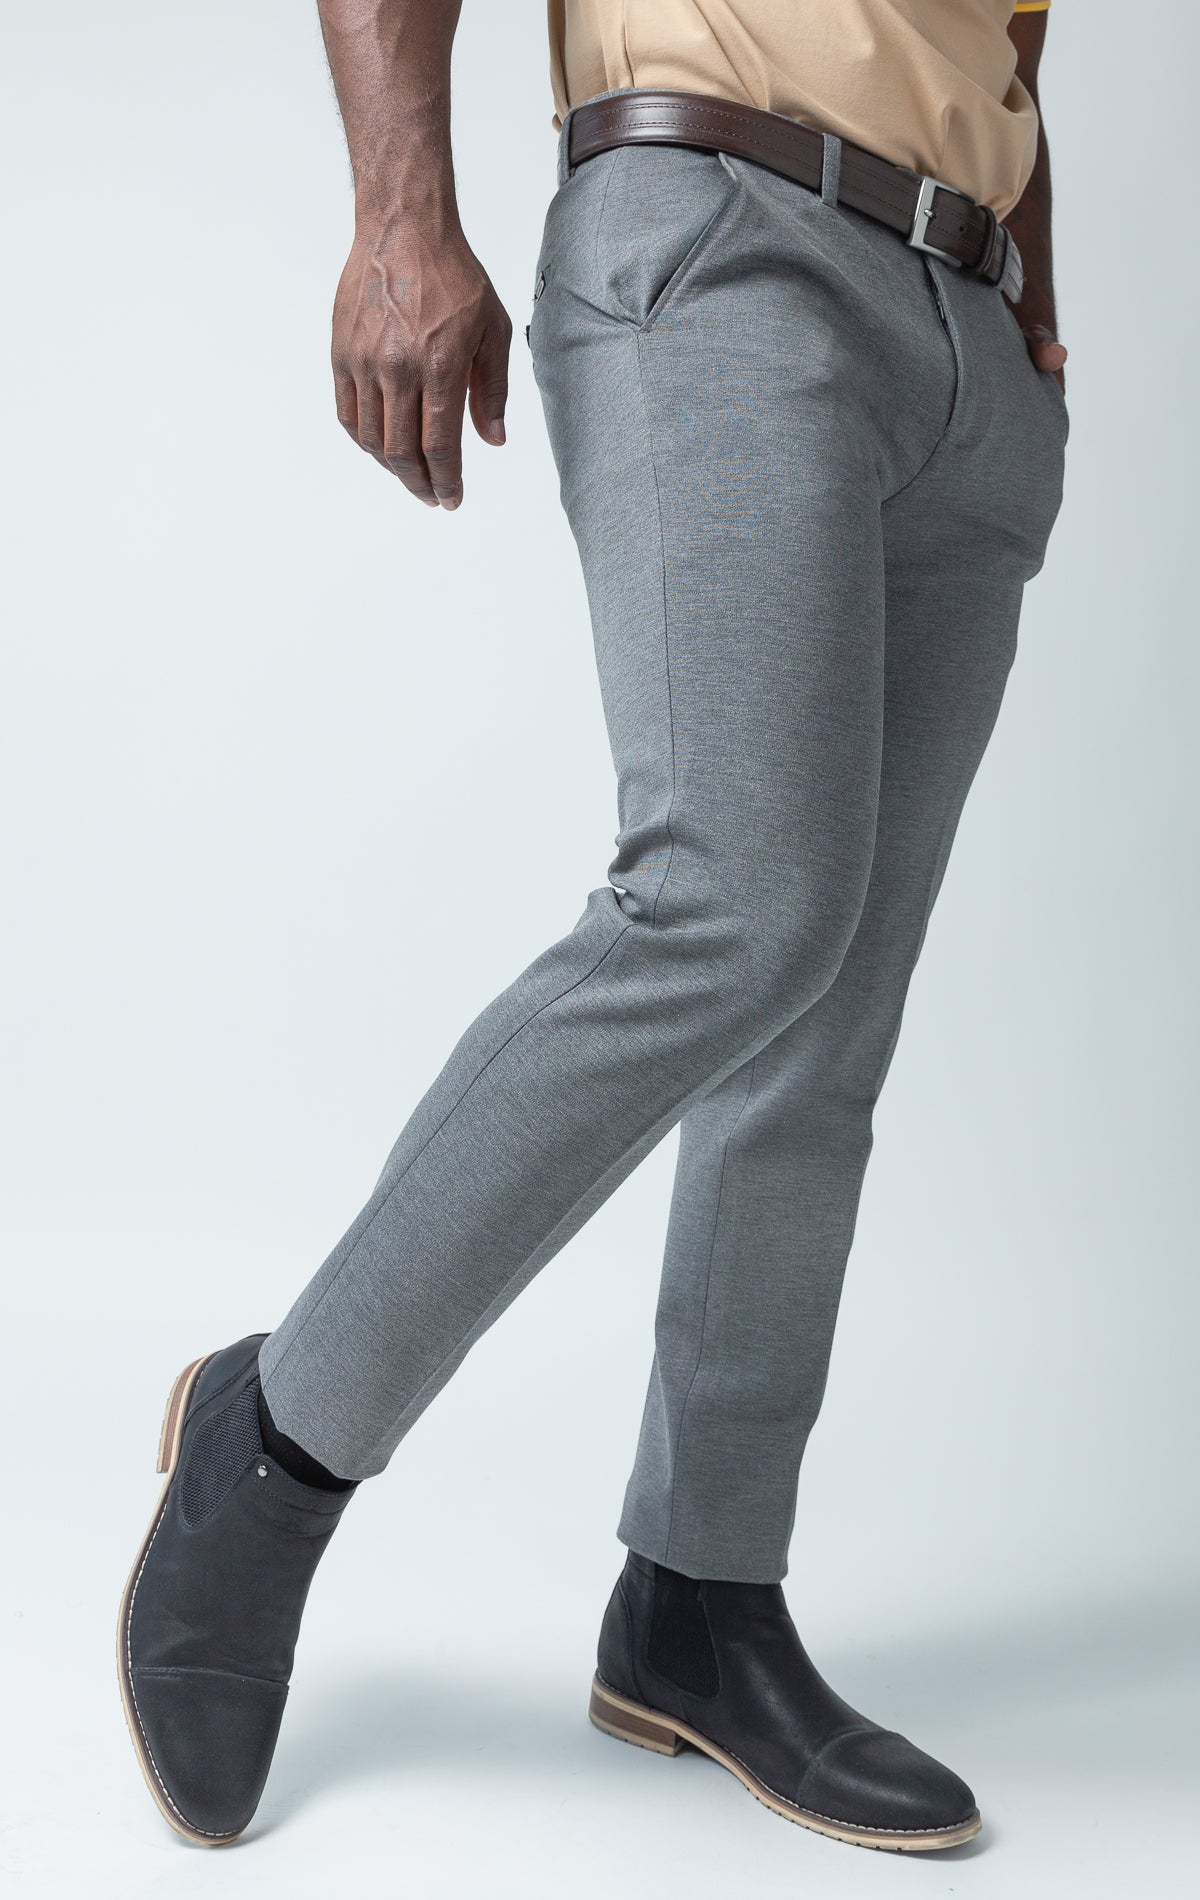 Grey dress pants with elastic waistband technology.